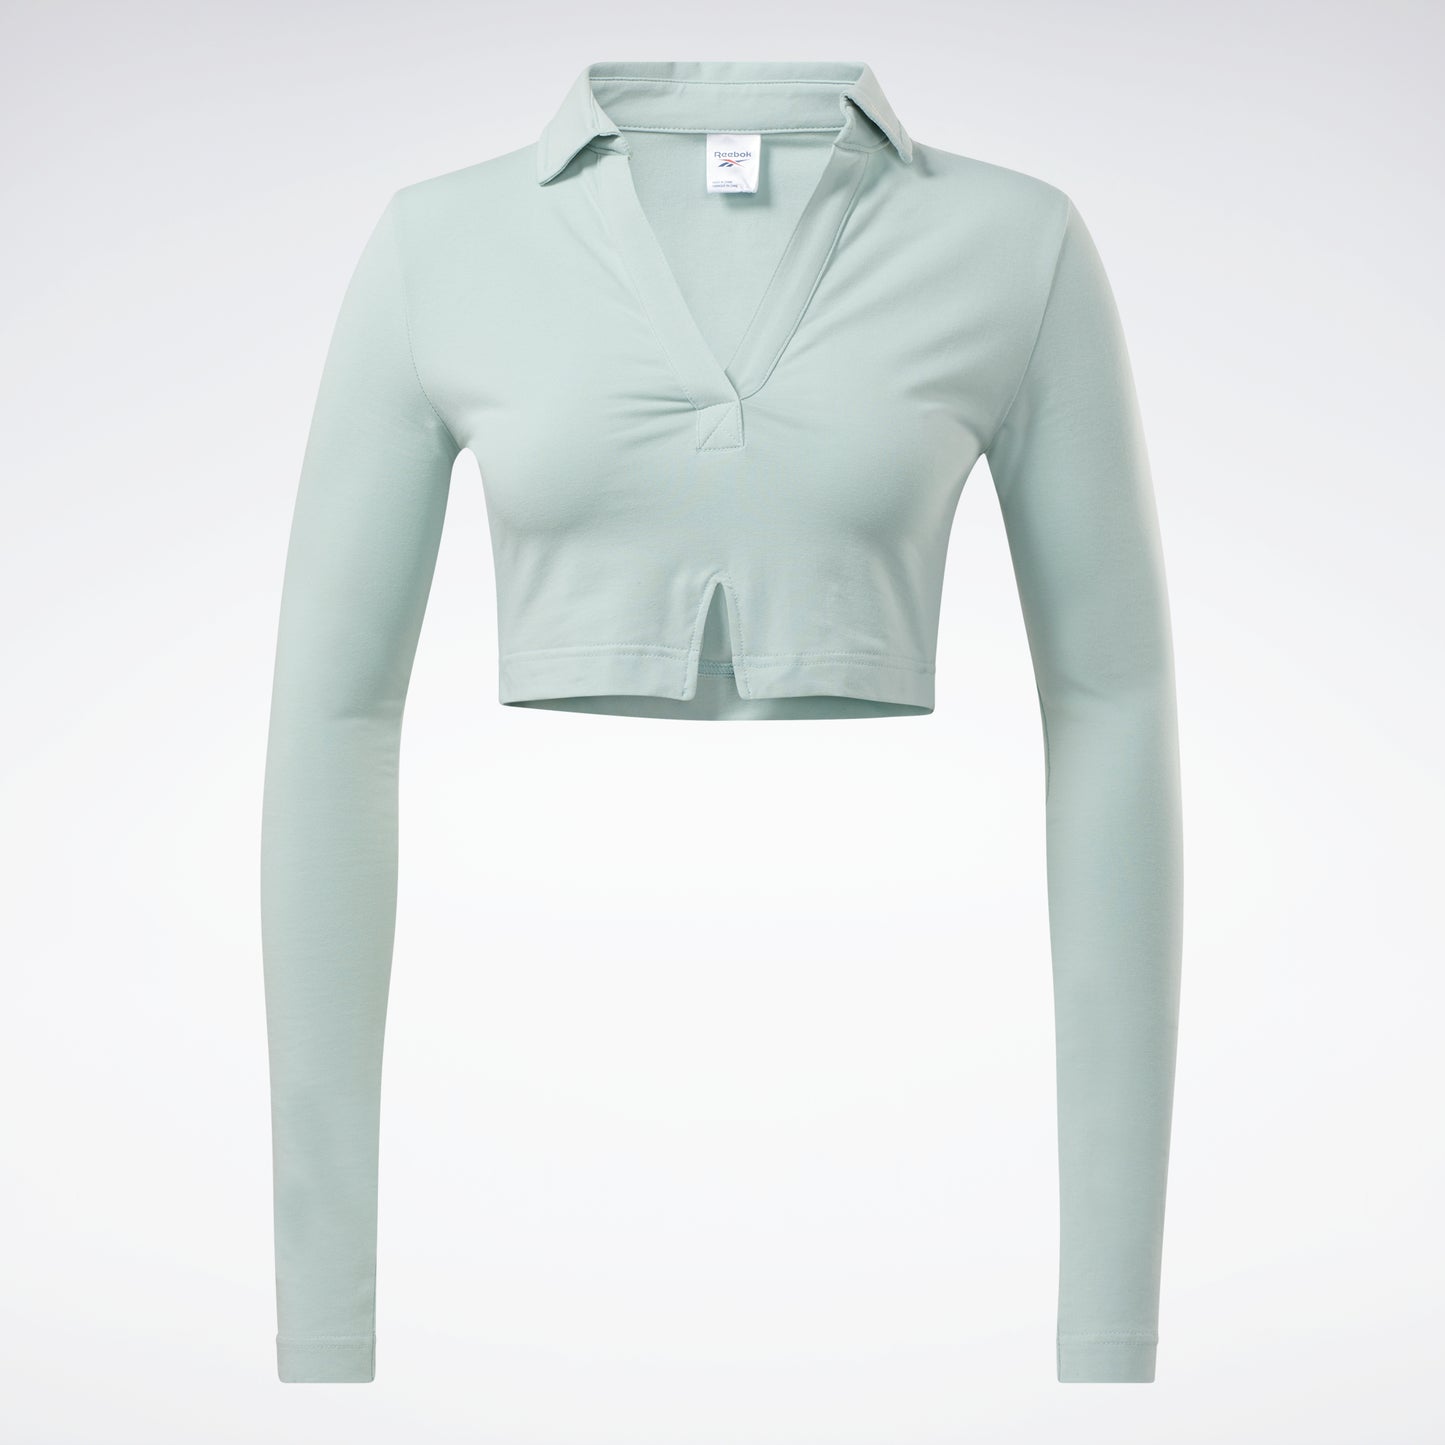 Reebok Apparel Women Classics Long Sleeve Polo Shirt Top Seagry